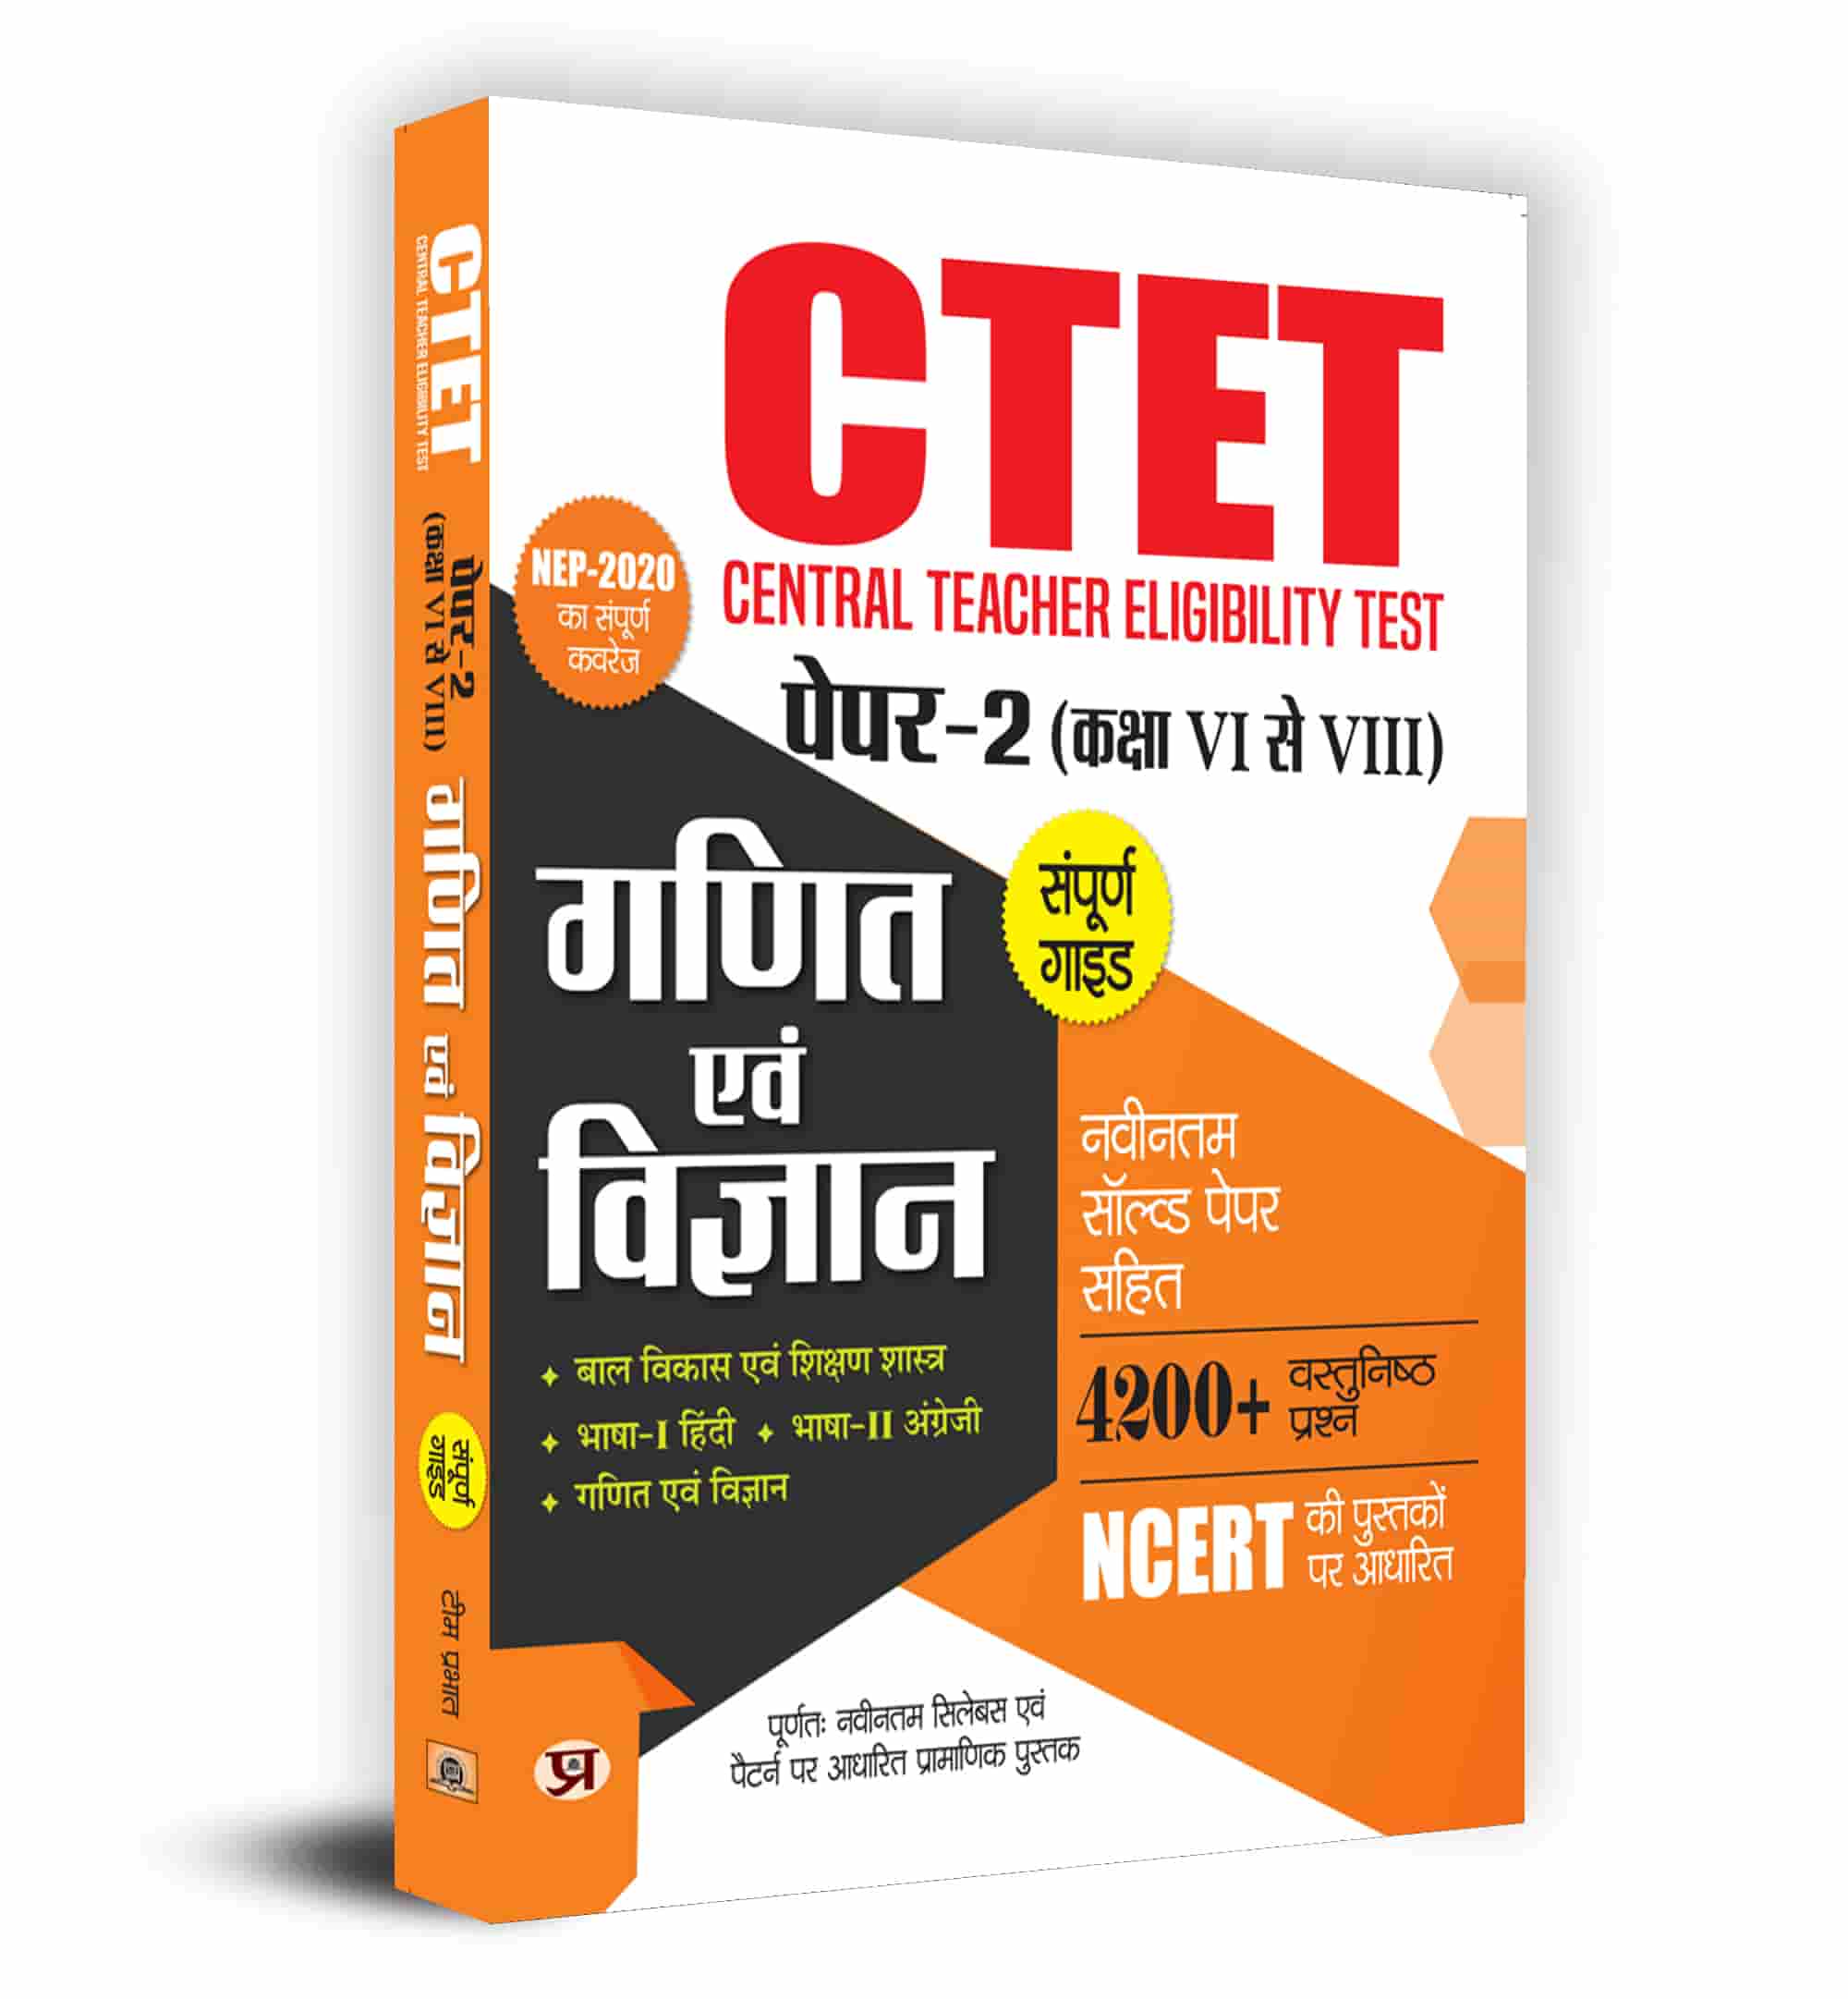 CTET Central Teacher Eligibility Test Paper-2 (Class Vi-Viii) Ganit Evam Vigyan (Mathematics & Science) with Latest Solved Paper